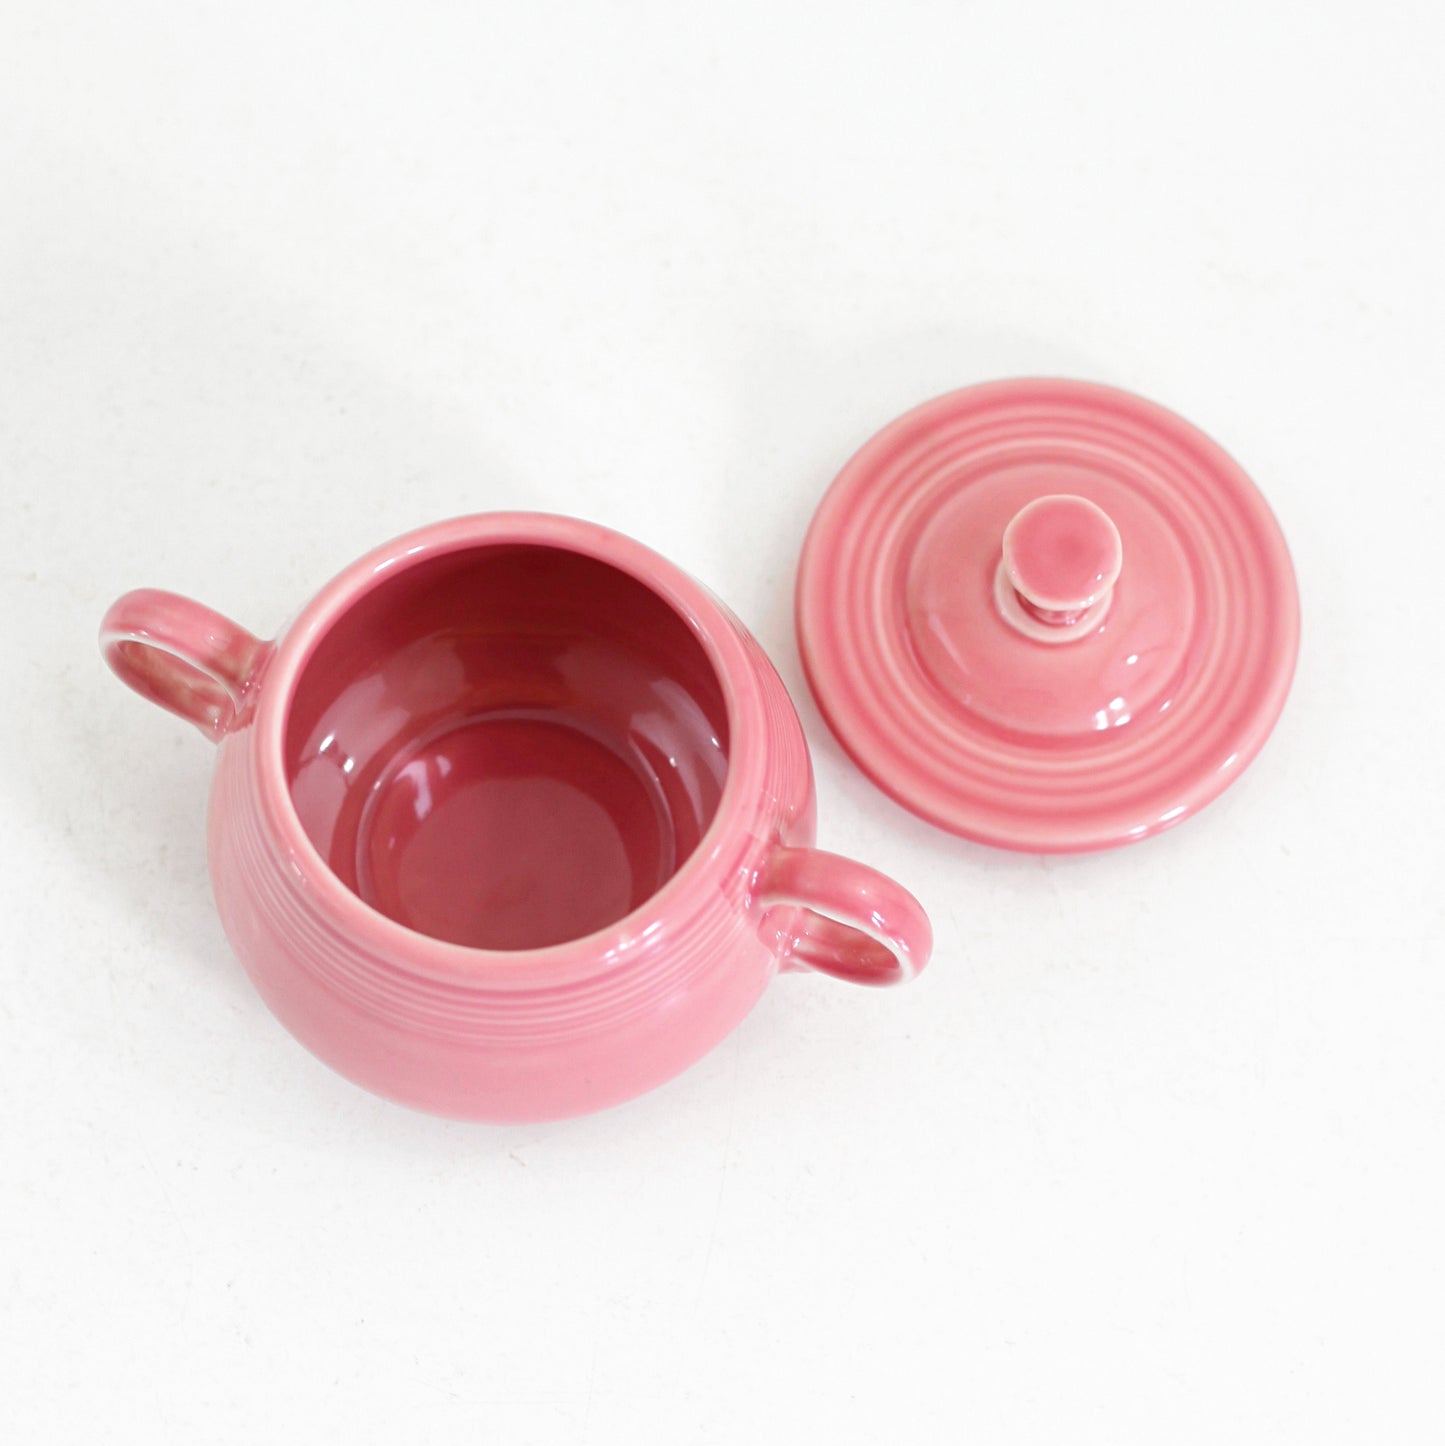 SOLD - Vintage Fiesta Pink Rose Cream & Sugar Set